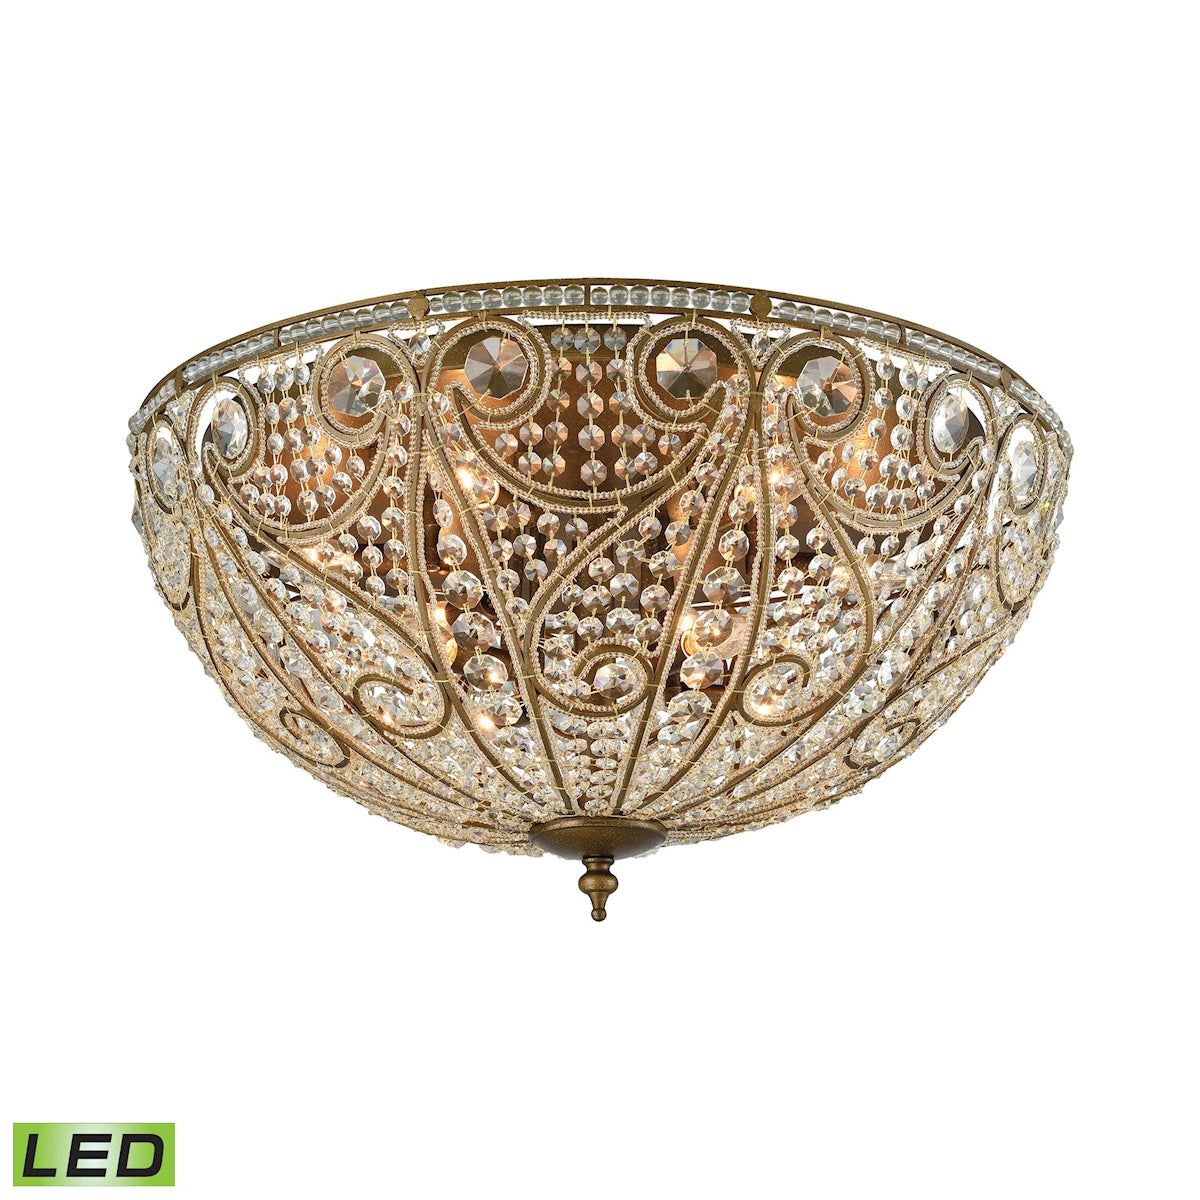 ELK Lighting 15964/10-LED Elizabethan 10-Light Flush Mount in Dark Bronze with Clear Crystal - Includes LED Bulbs